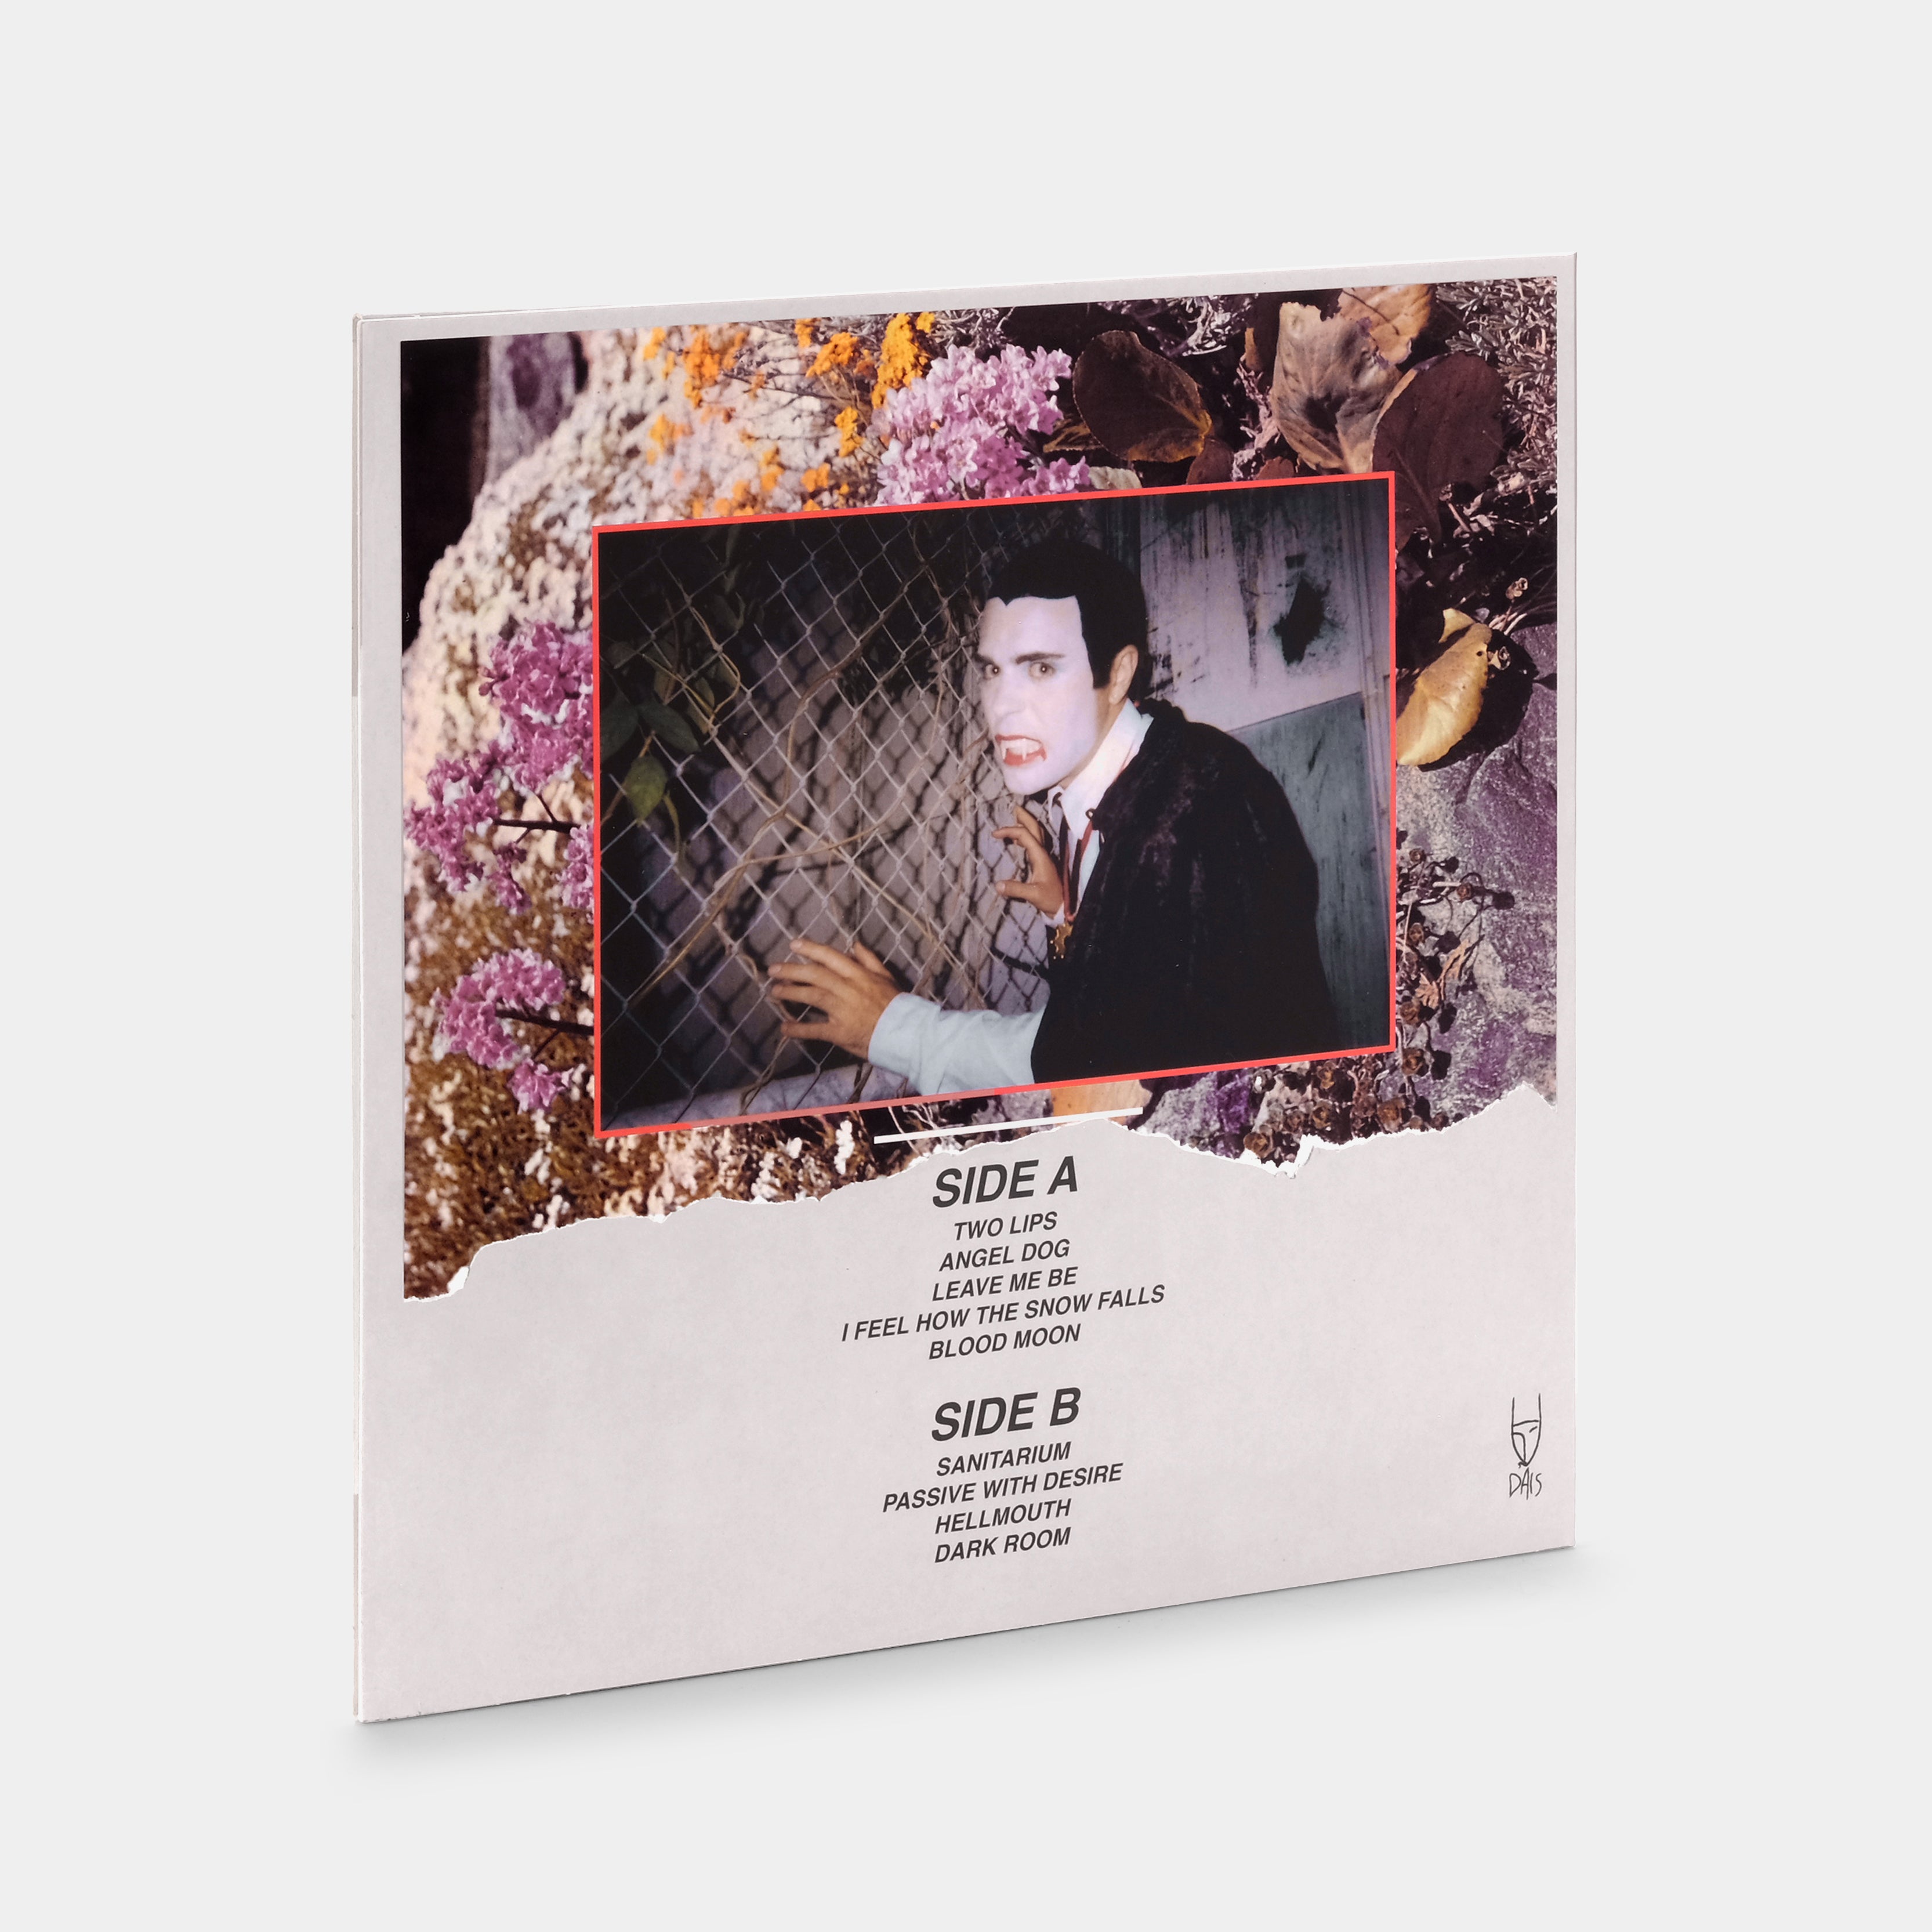 Choir Boy - Passive With Desire Limited Edition LP Transparent Clear Vinyl Record